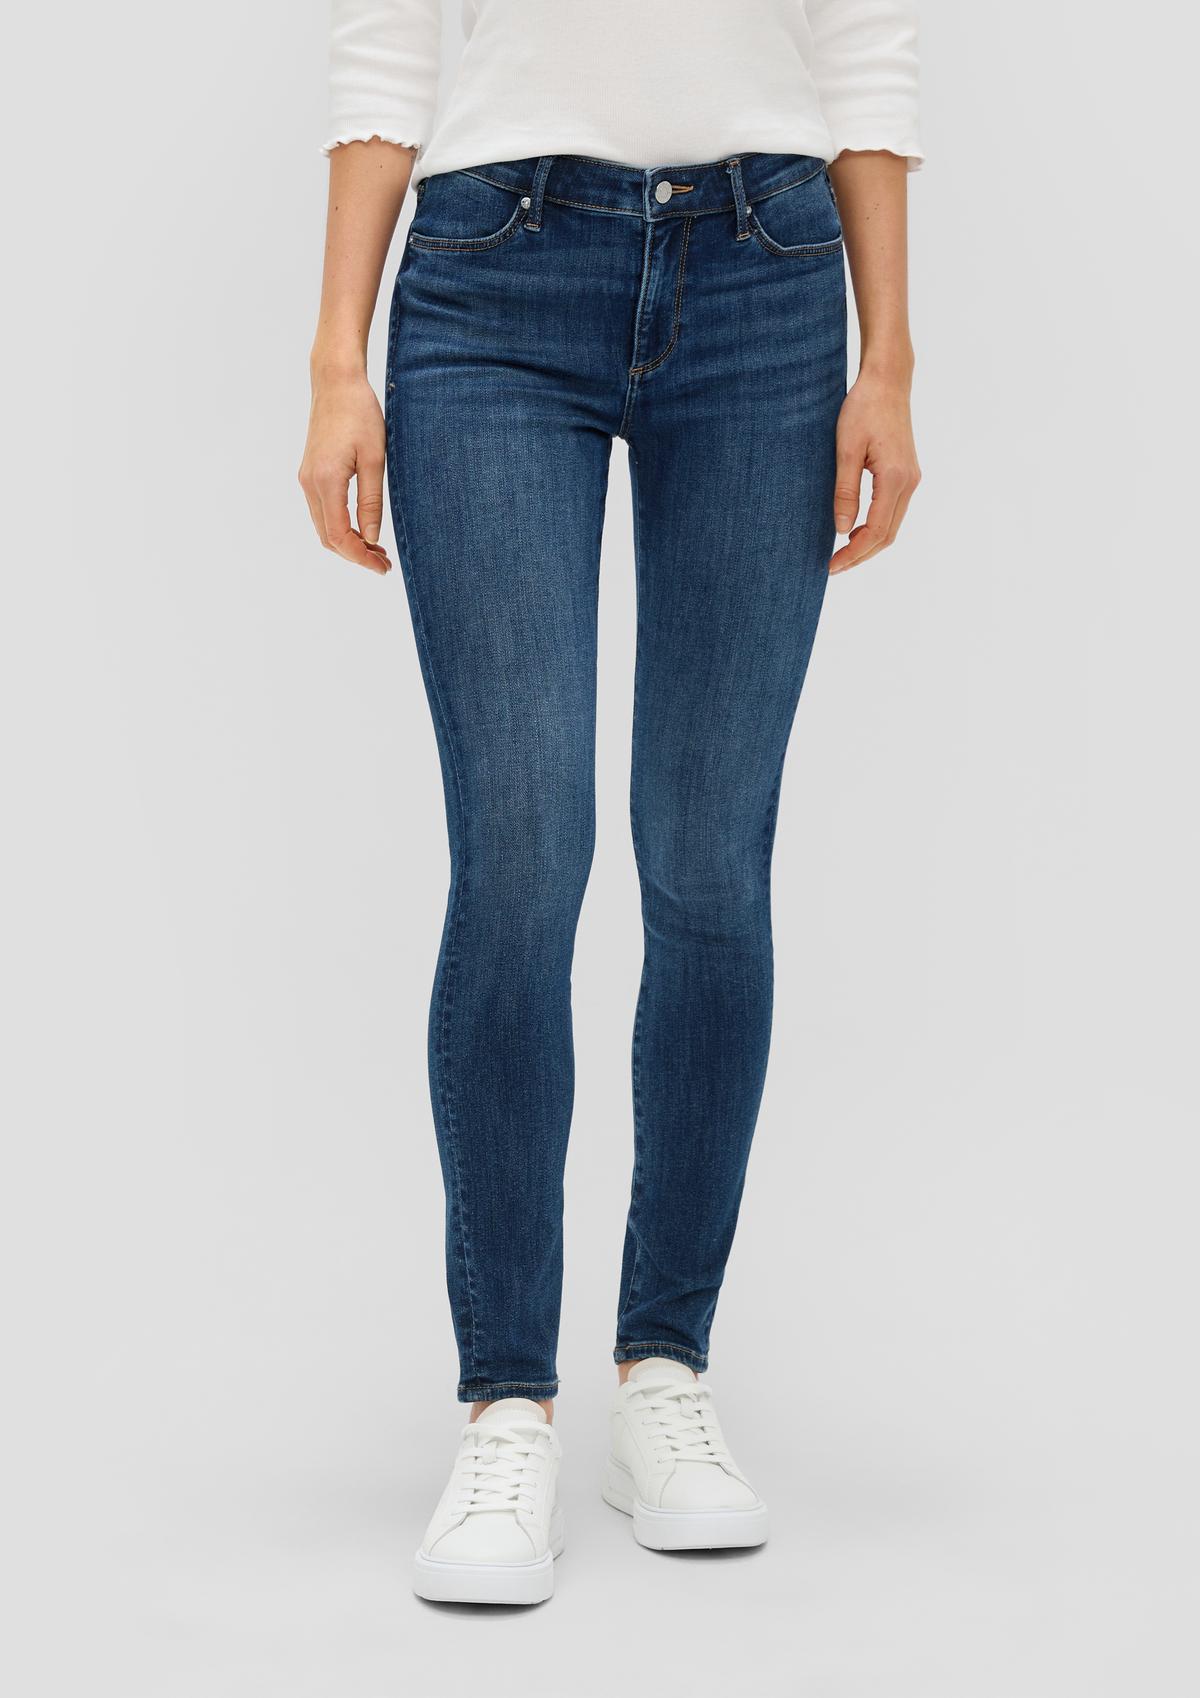 Jeans Izabell / Skinny fit / Mid rise / Skinny leg